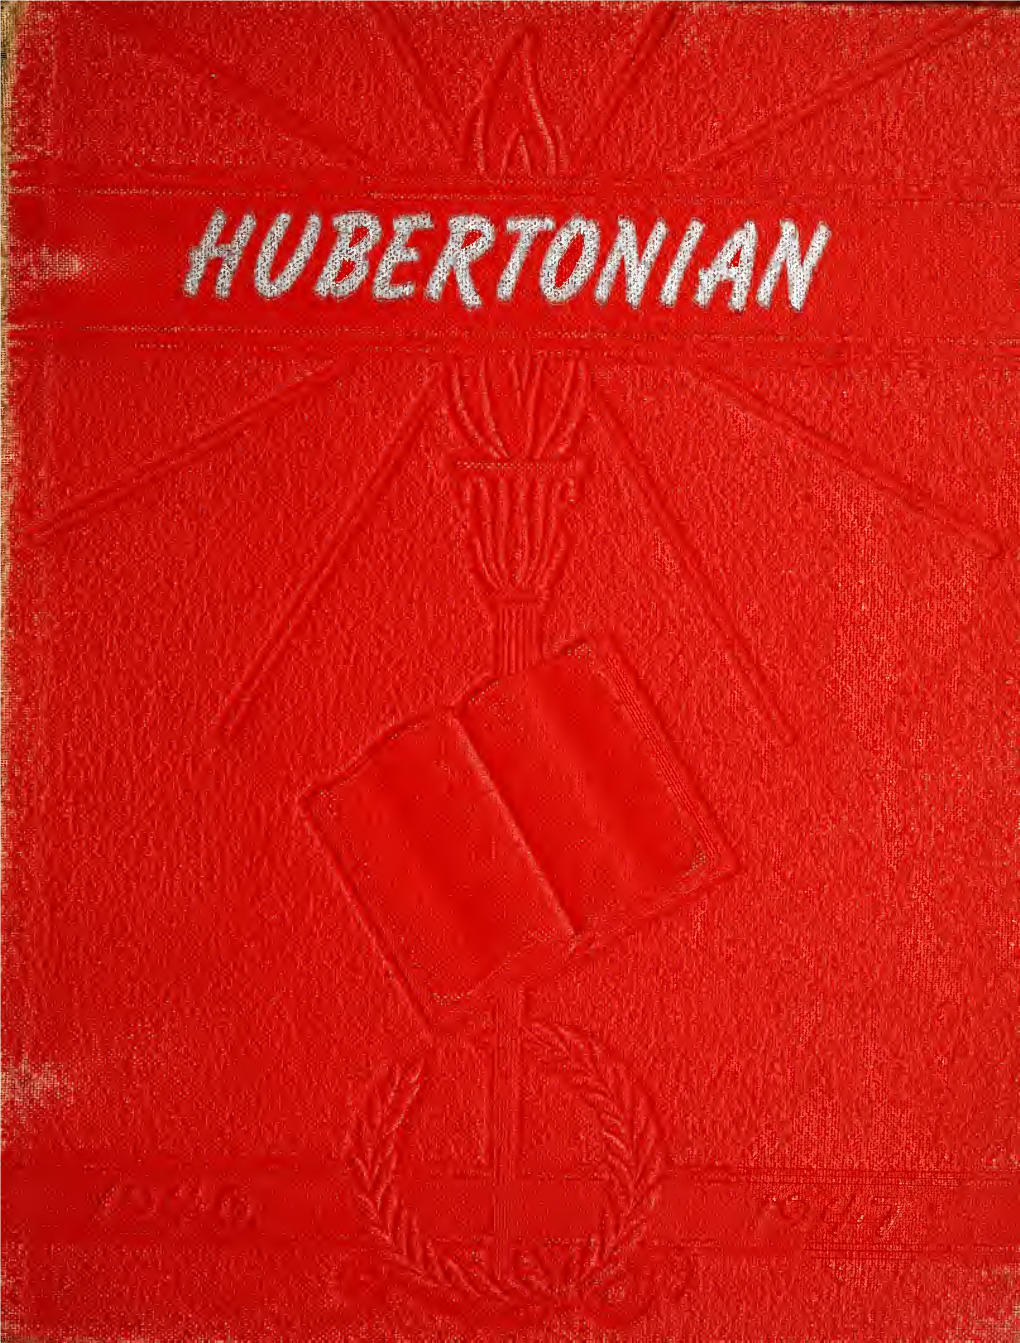 Hubertonian 1947 [Yearbook]